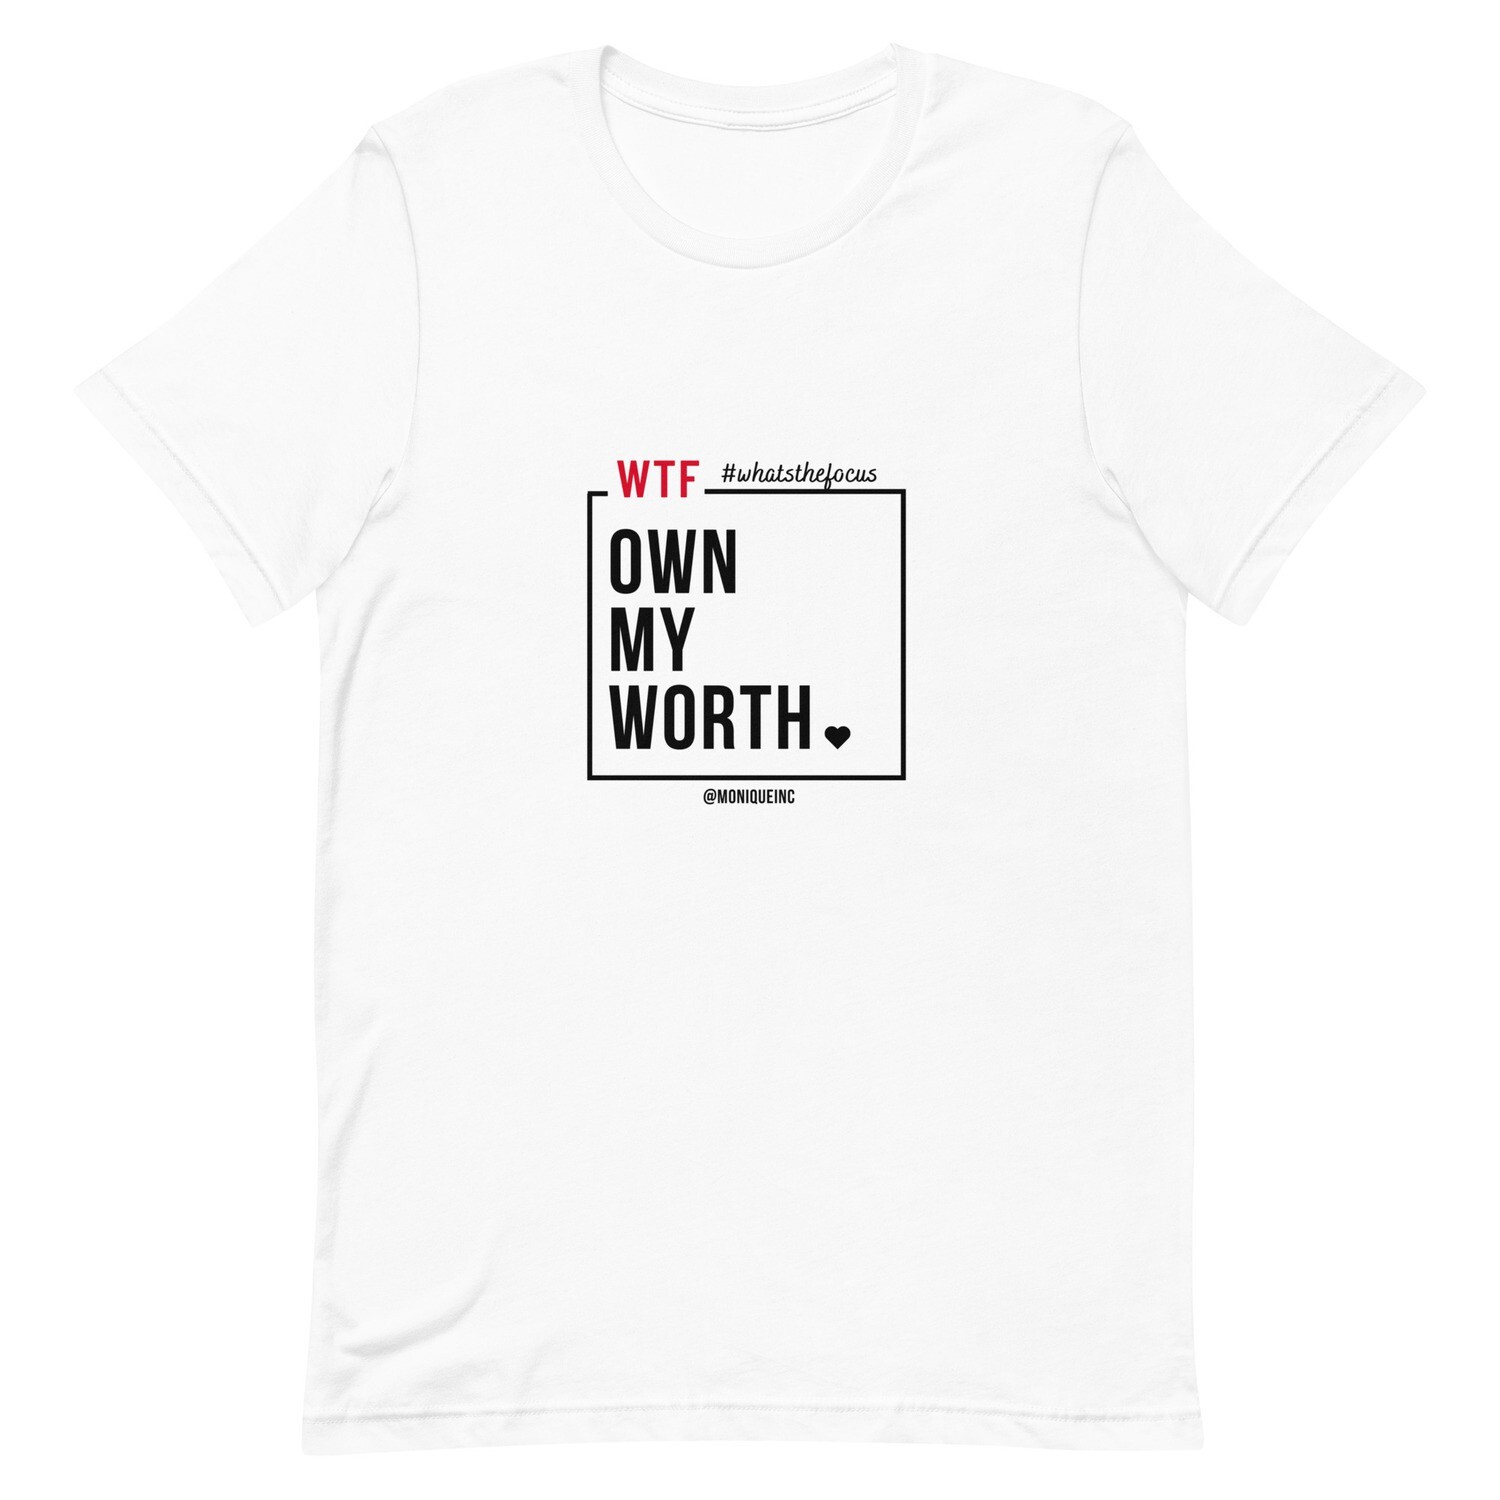 Own My Worth - White & Red Unisex Tee